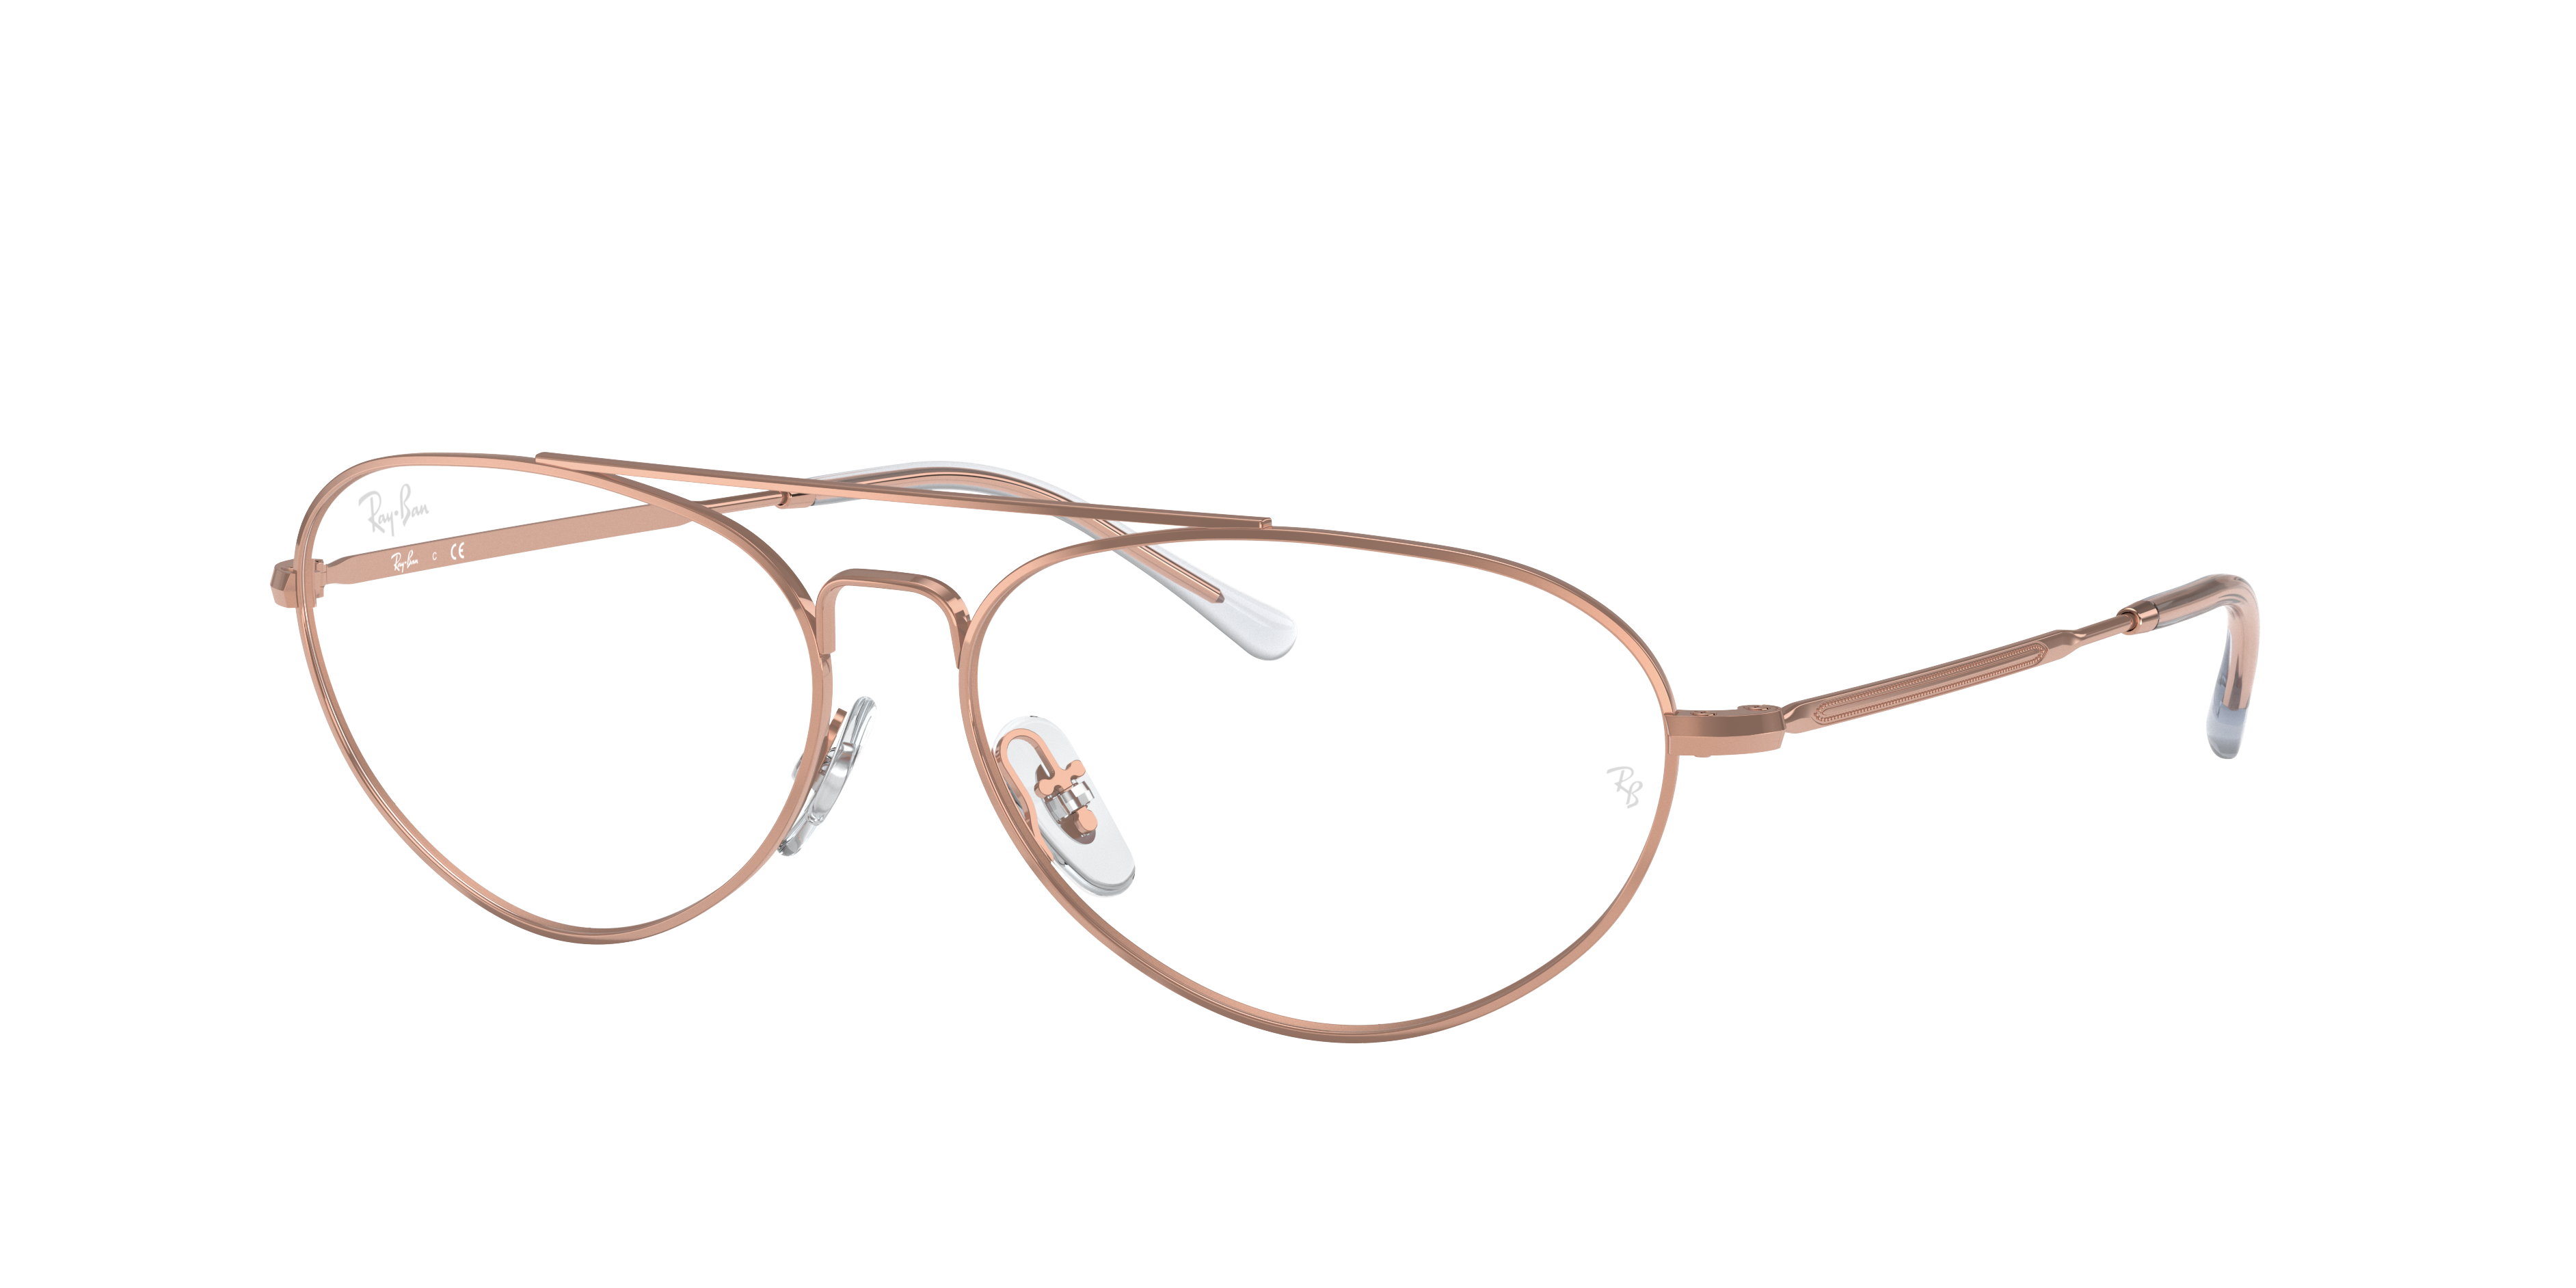 Rb6454 Optics Eyeglasses with Rose Gold Frame | Ray-Ban®